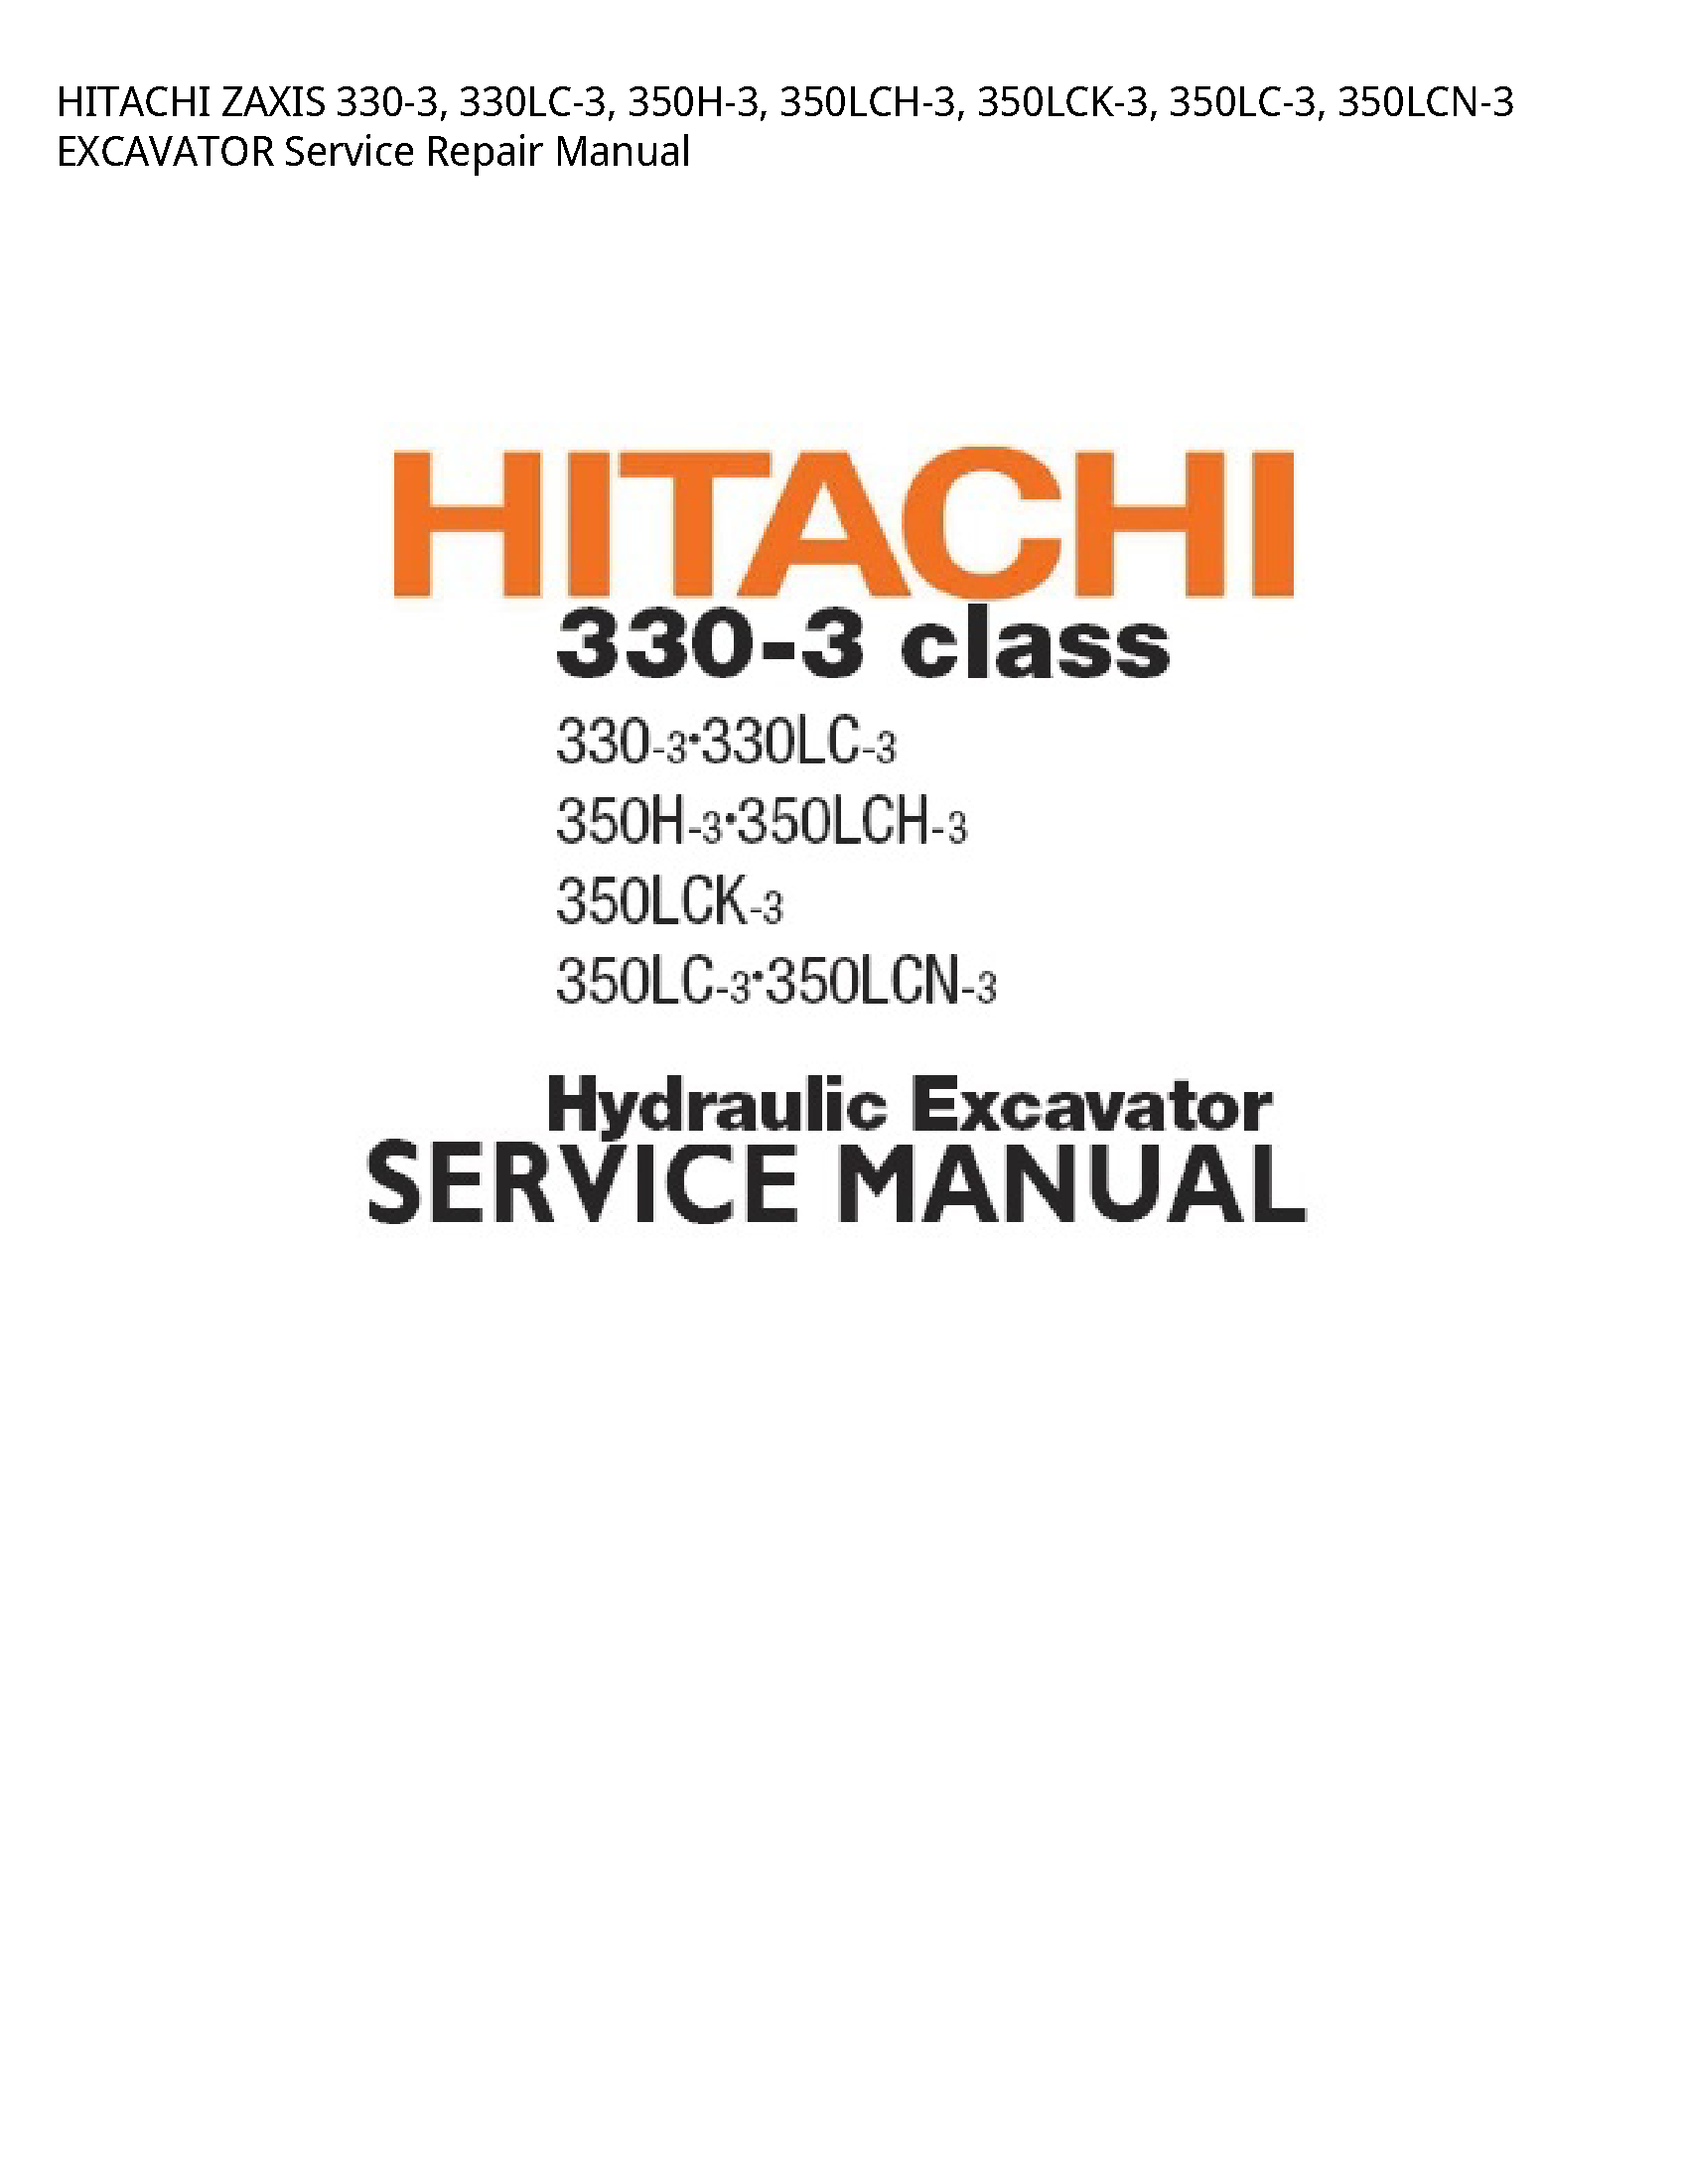 Hitachi 330-3 ZAXIS EXCAVATOR manual